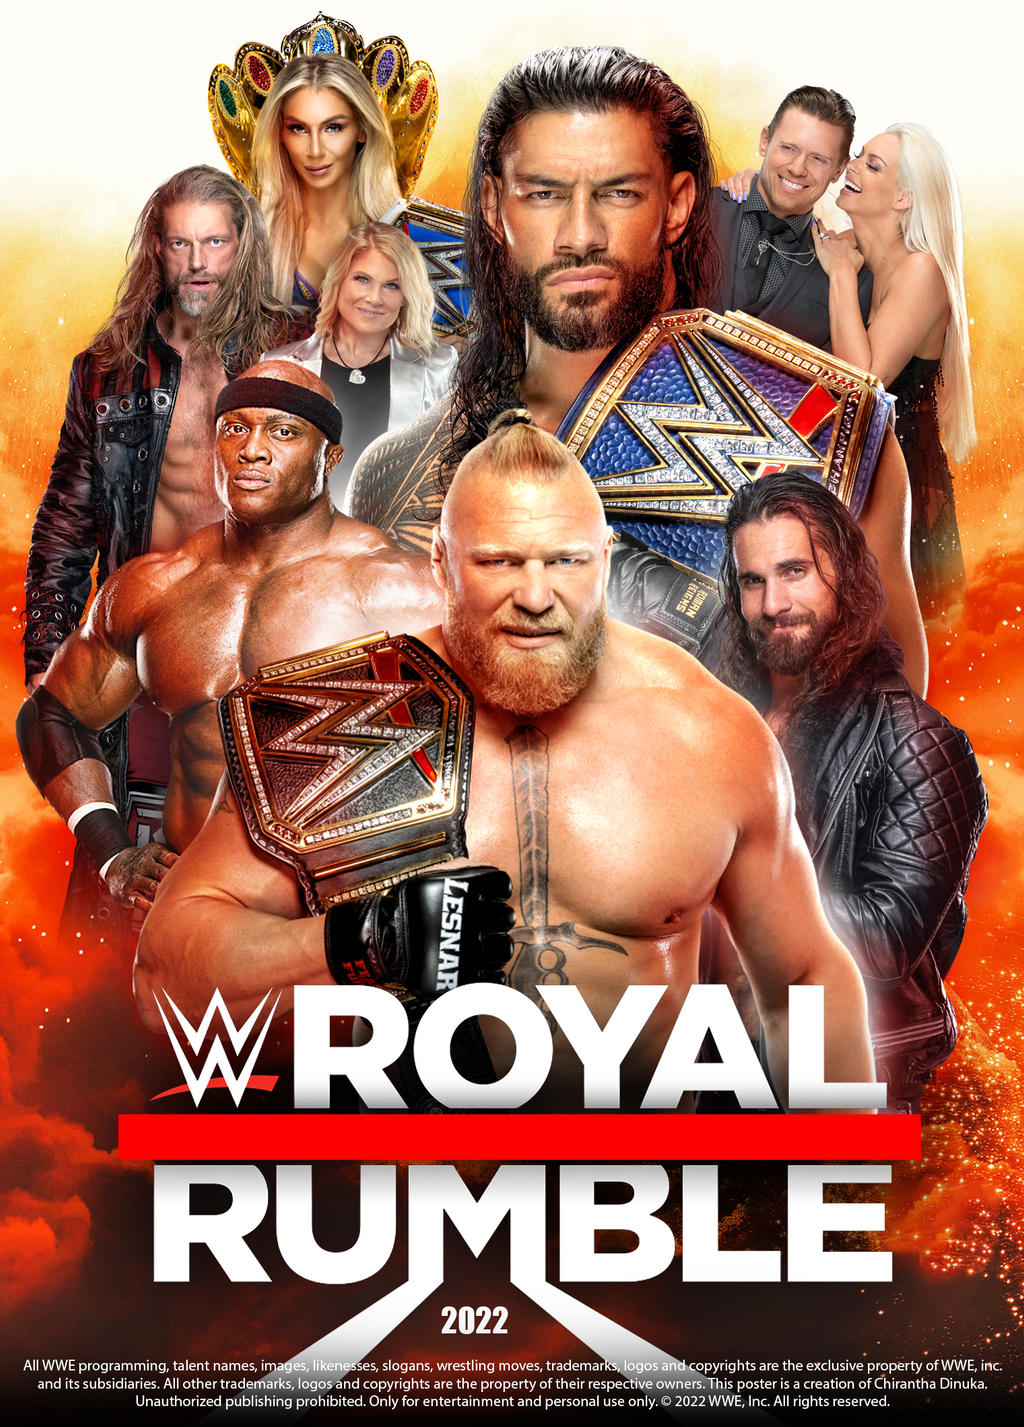 WWE Royal Rumble (2022) HDRip English Full Movie Watch Online Free